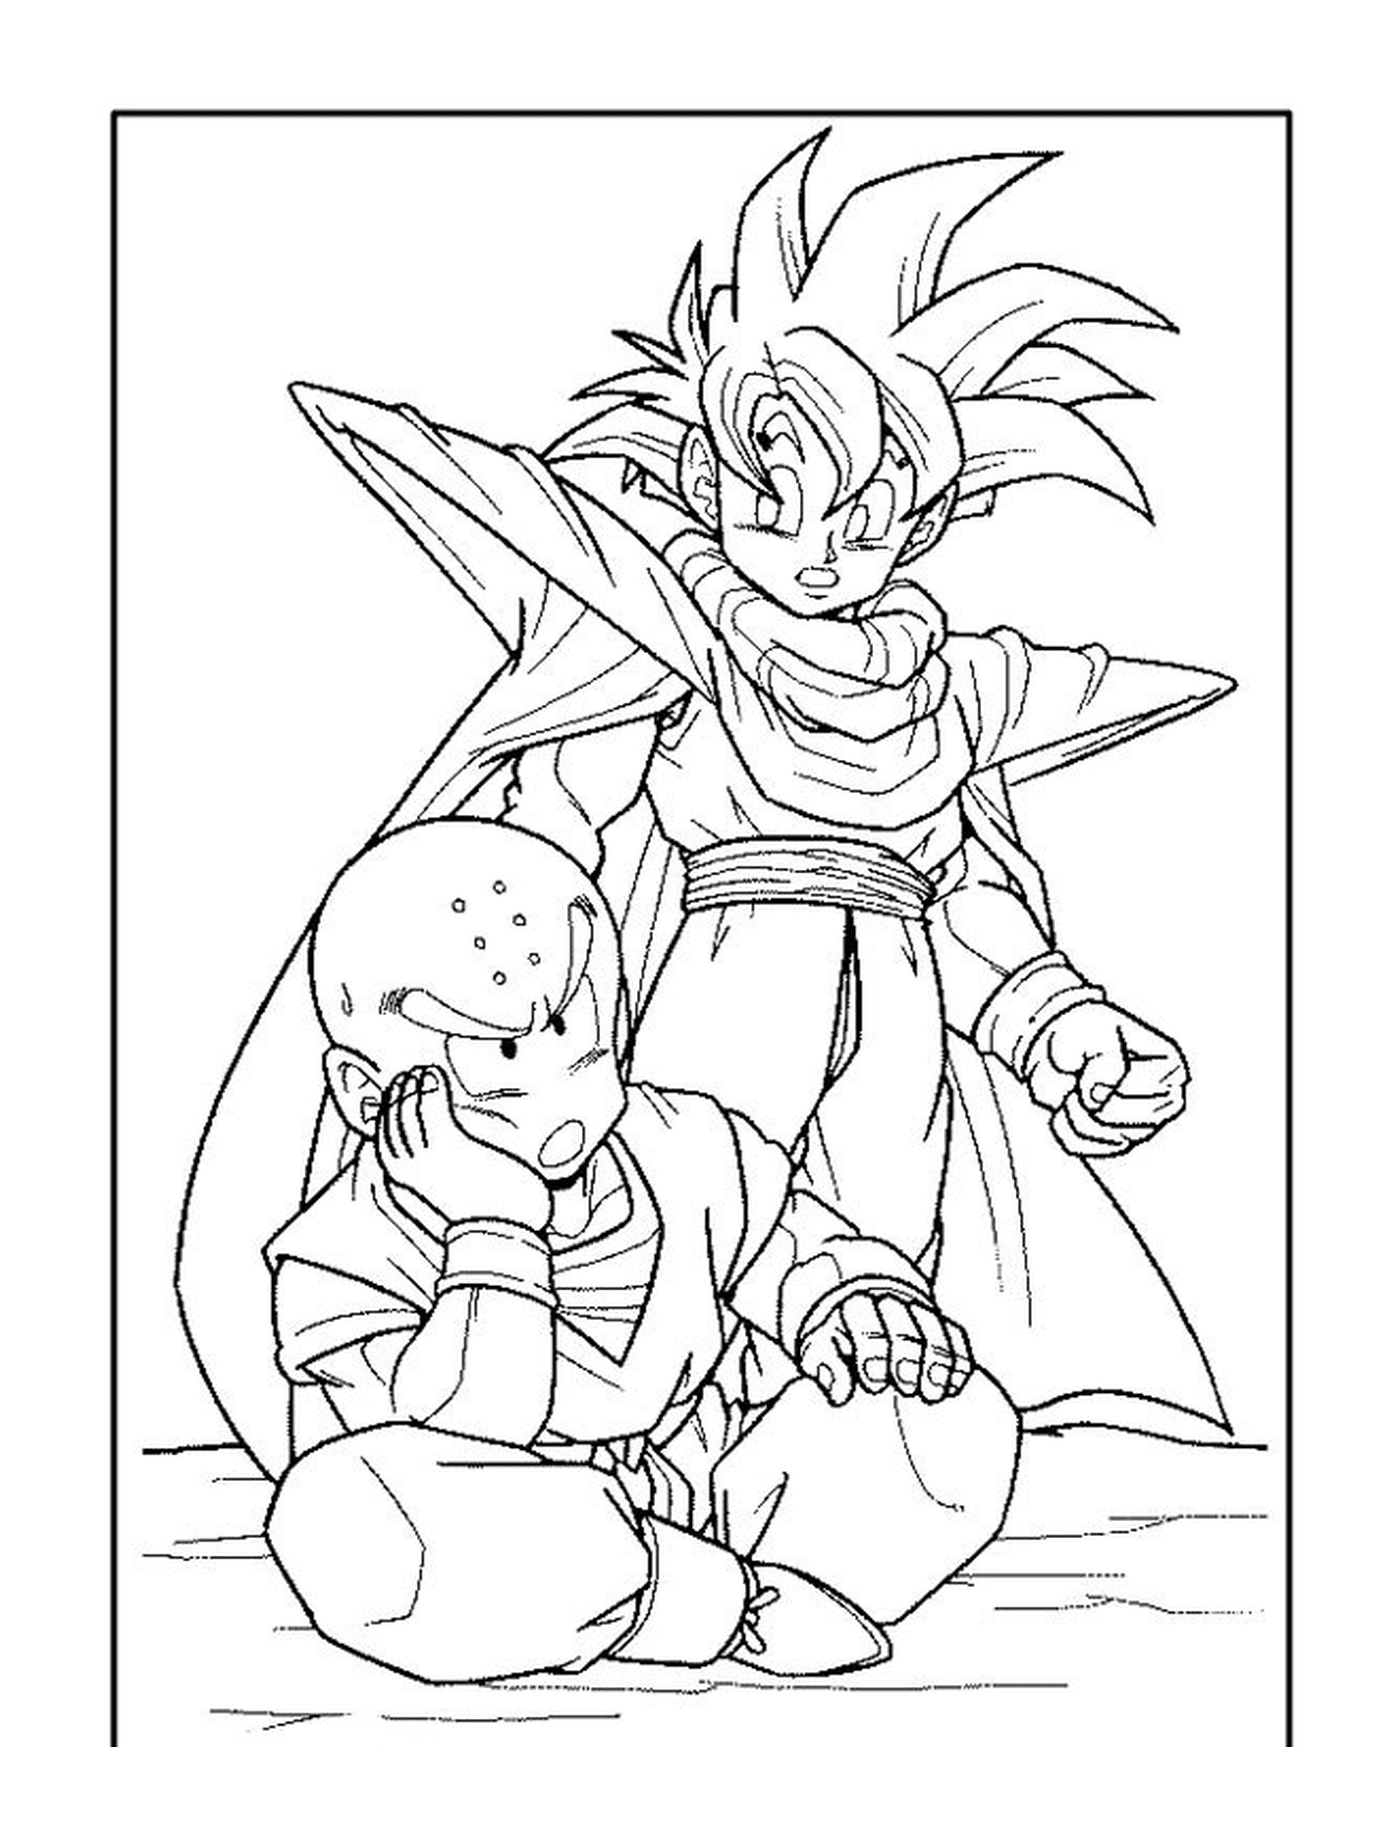  Goku and Krillin, duet of Dragon Ball Z 